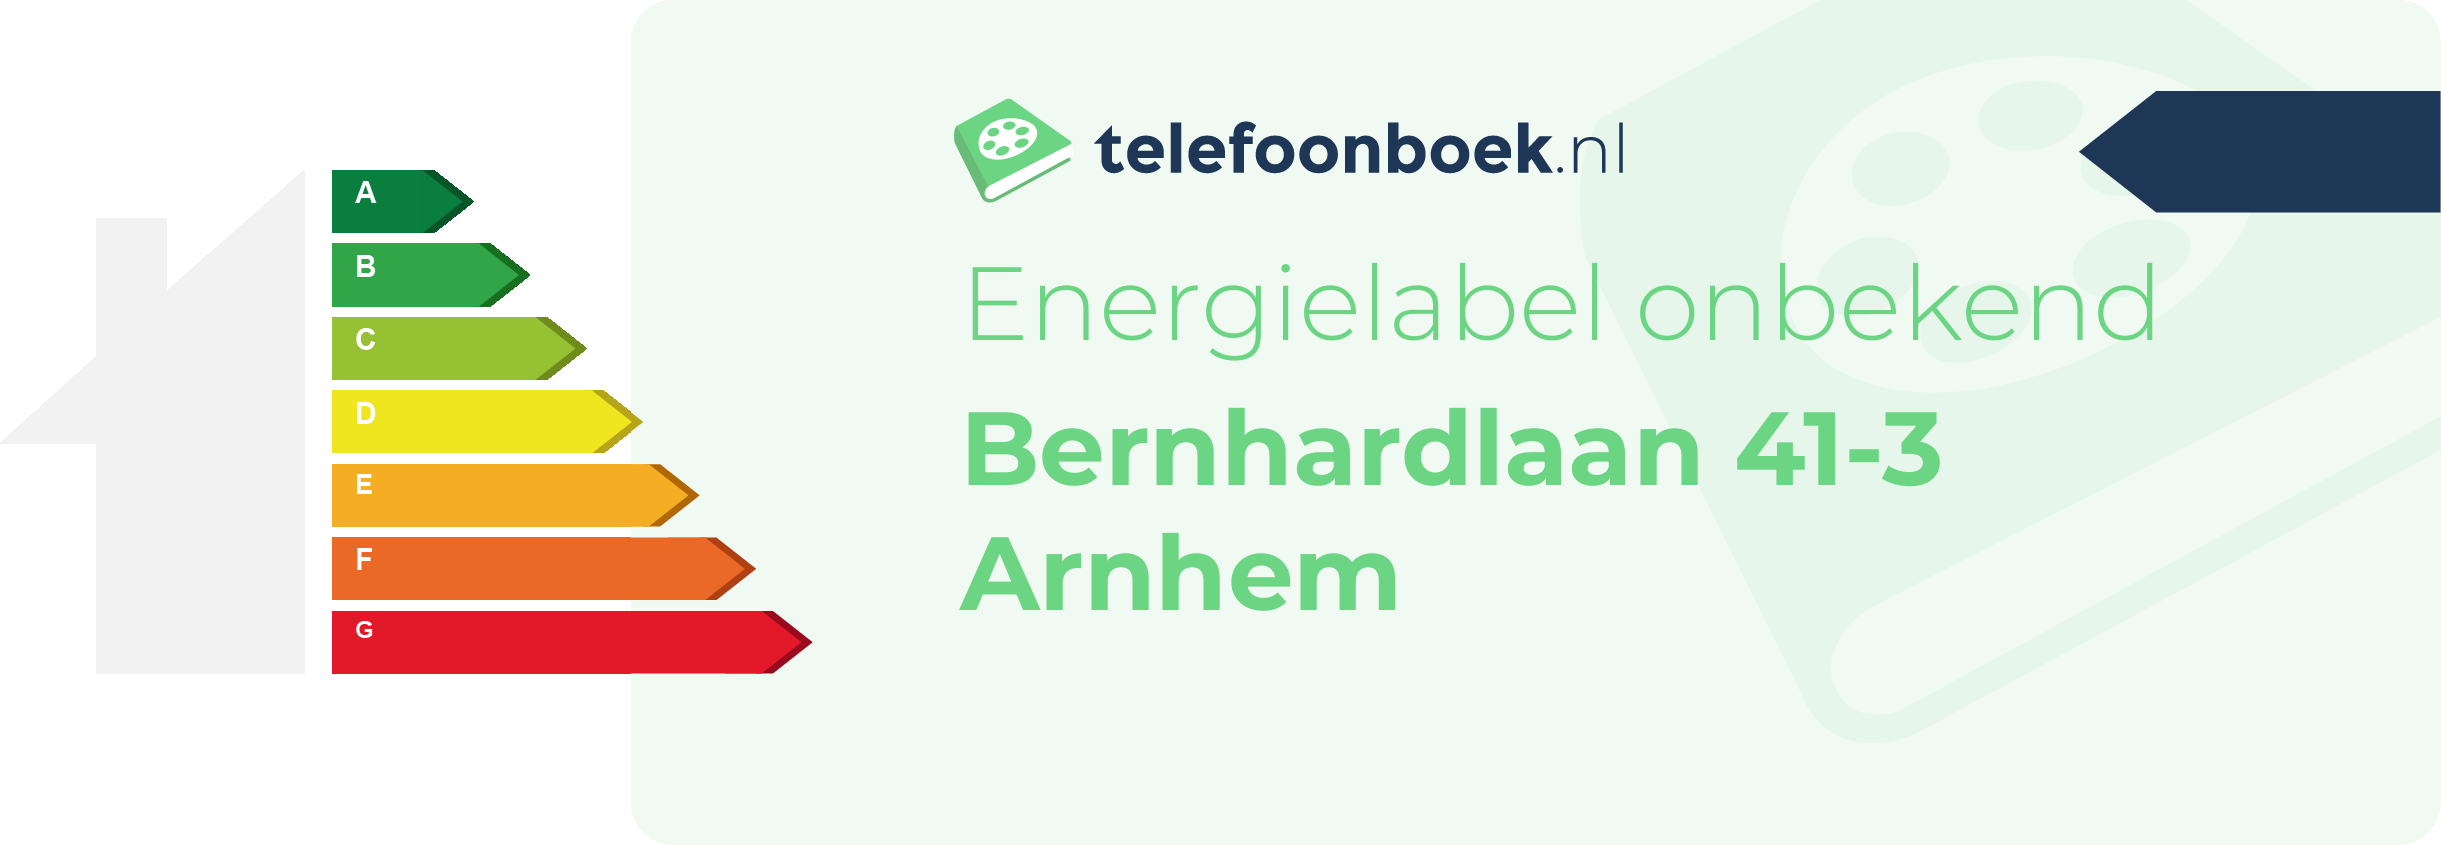 Energielabel Bernhardlaan 41-3 Arnhem